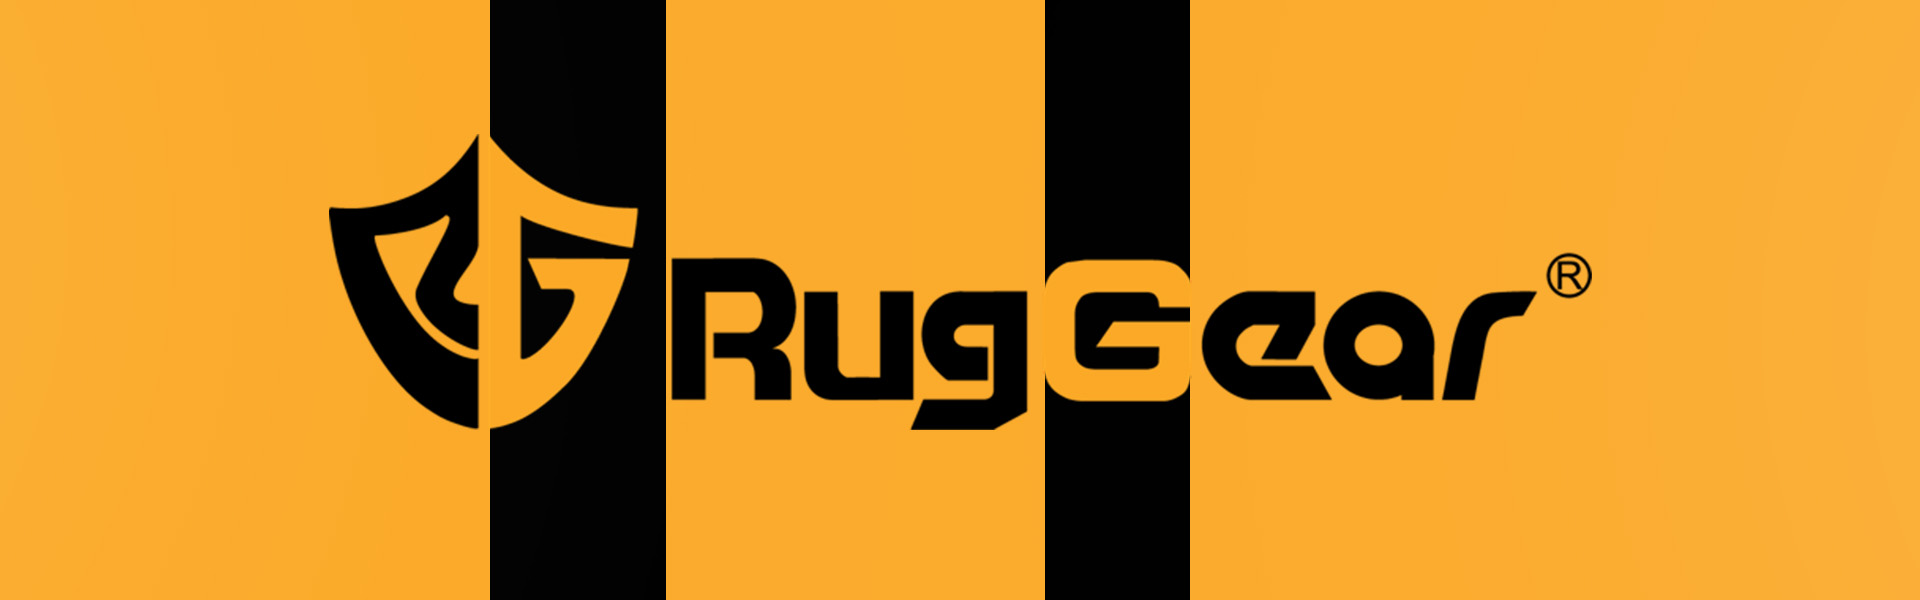 RugGear RG850, Dual SIM, Black 